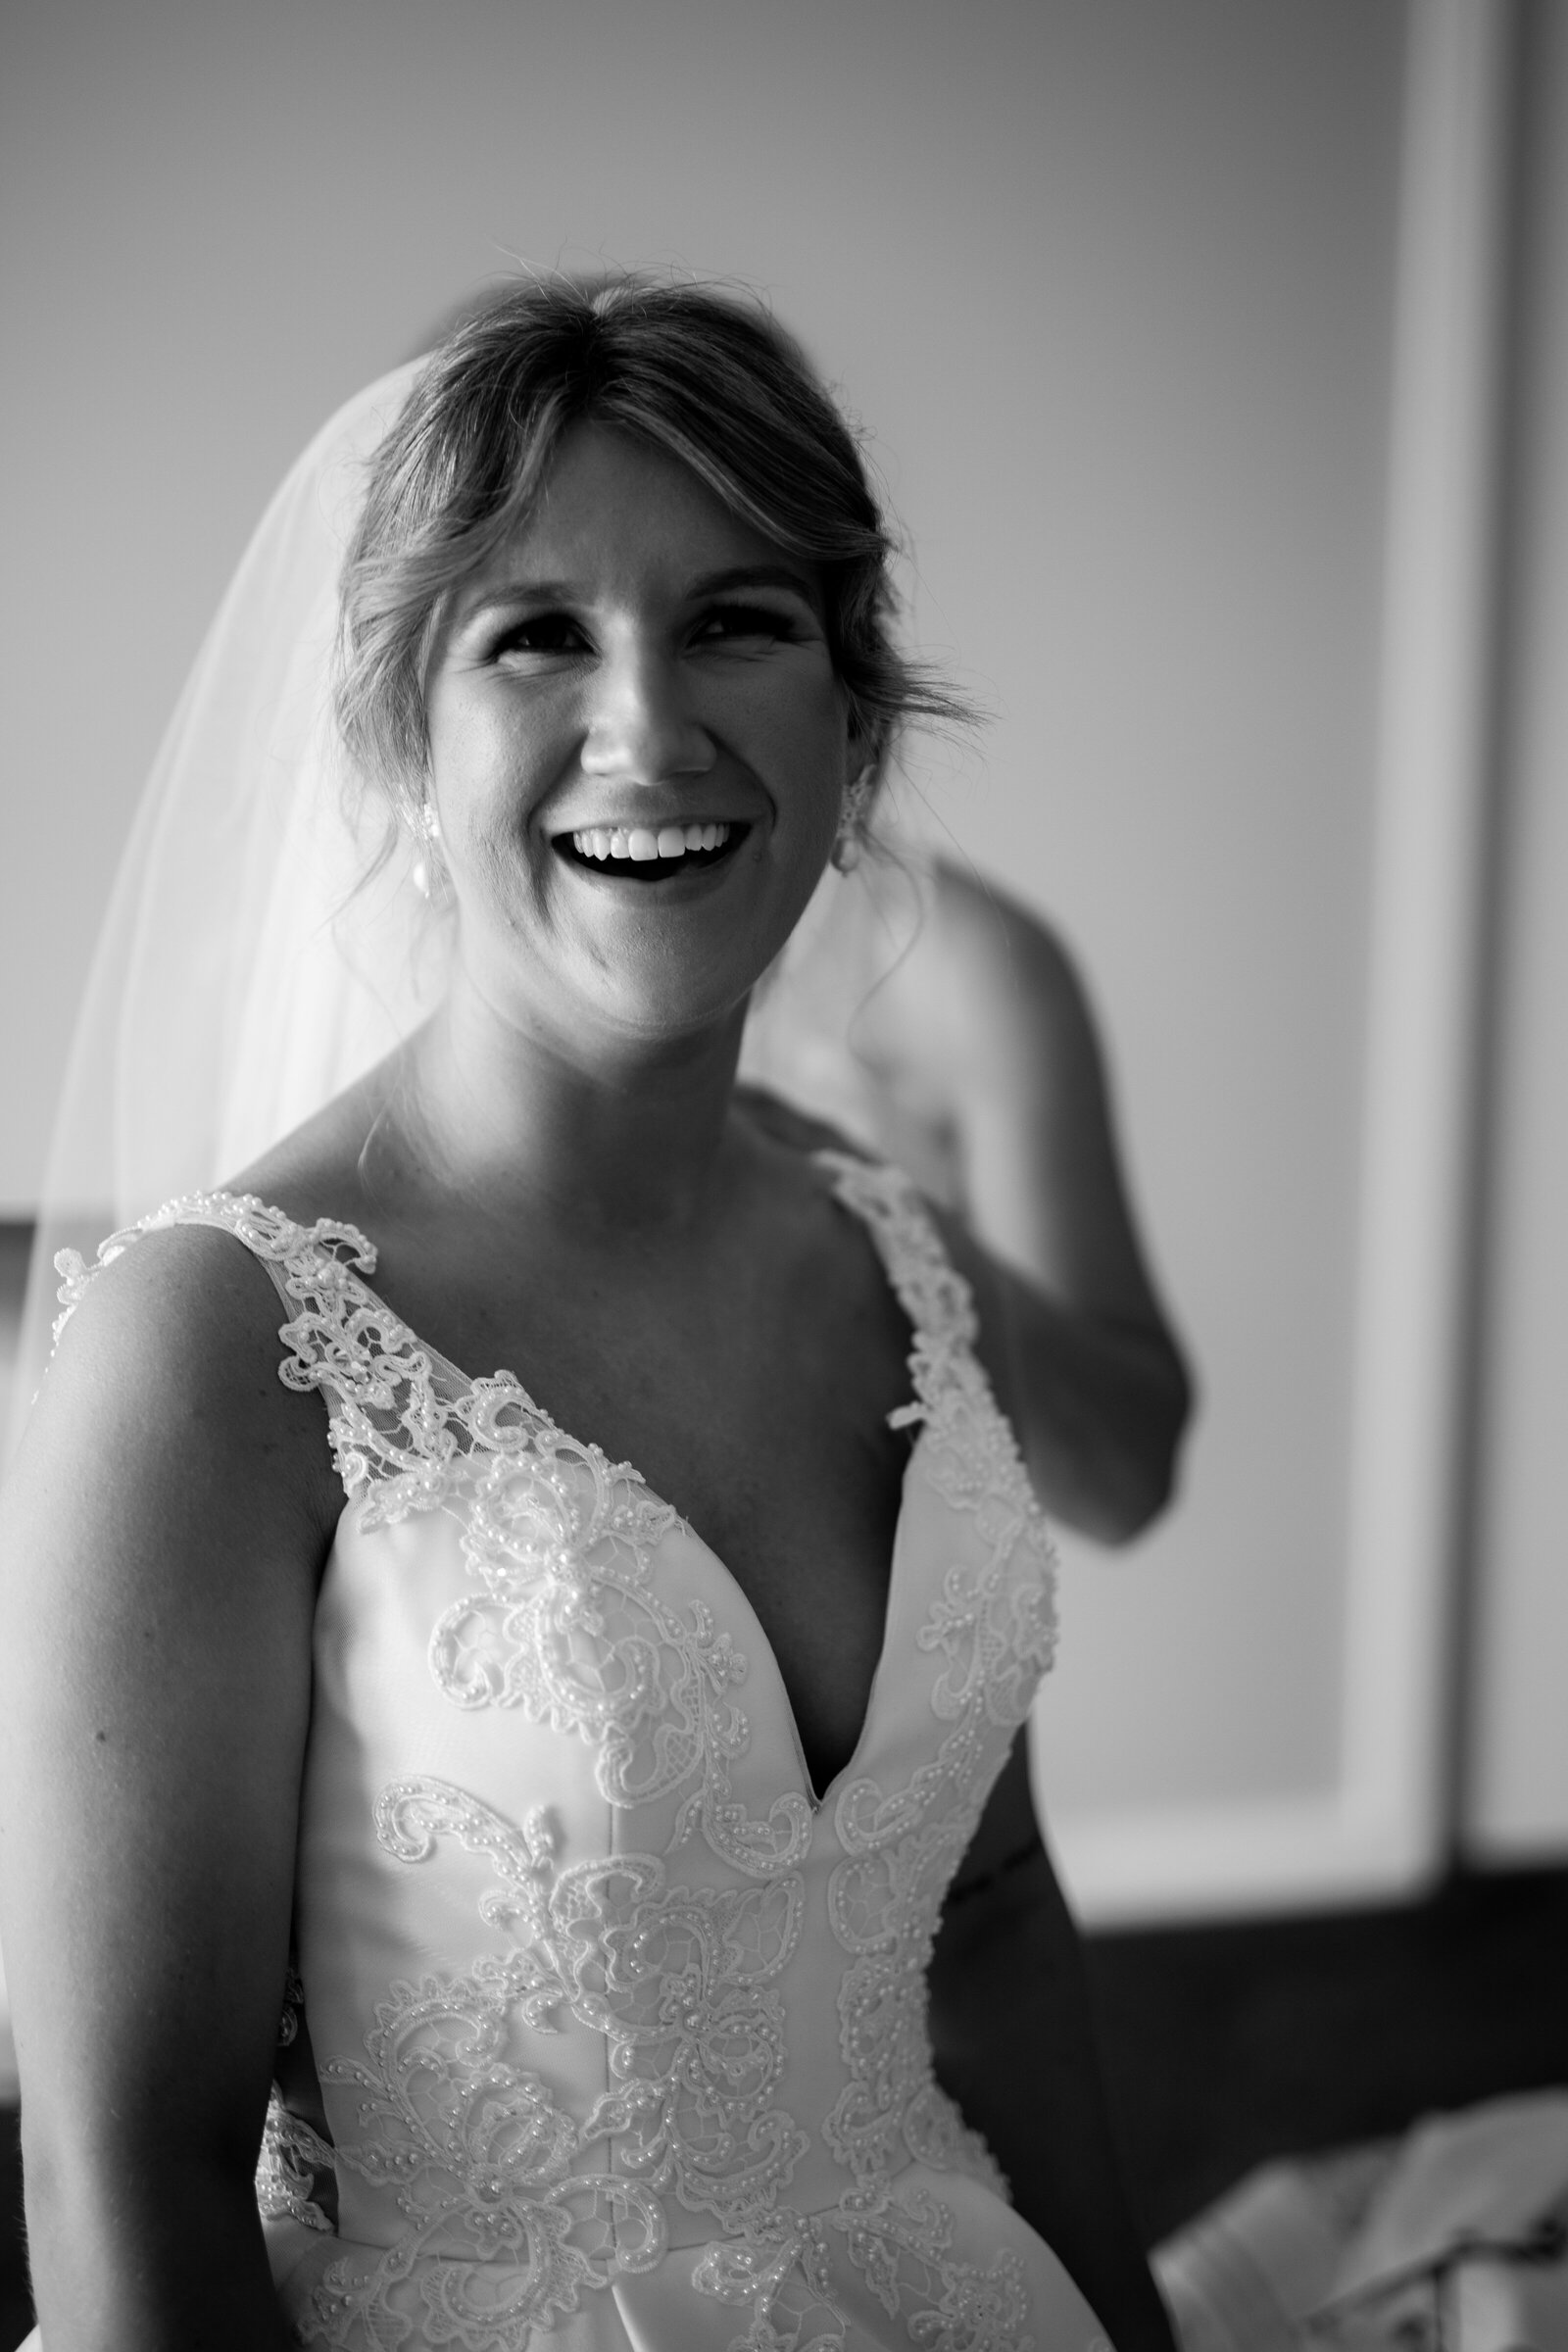 Rosie-Tom-Rexvil-Photography-Adelaide-Wedding-Photographer-209